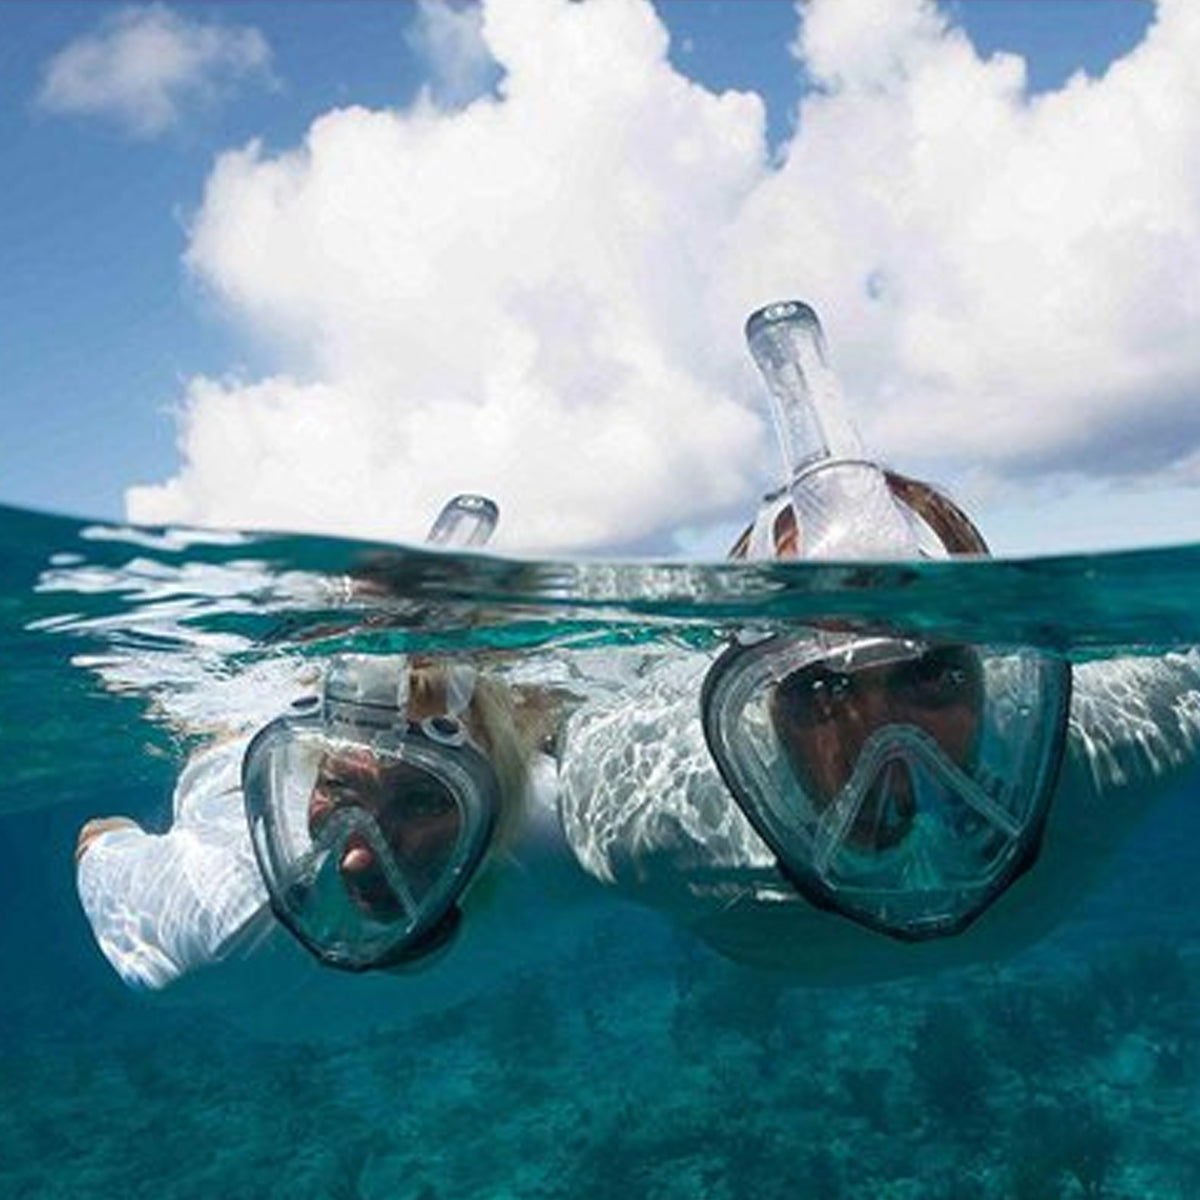 U.S. Divers AirGo Snorkel Mask – 180° View Anti-Fog No Leaks